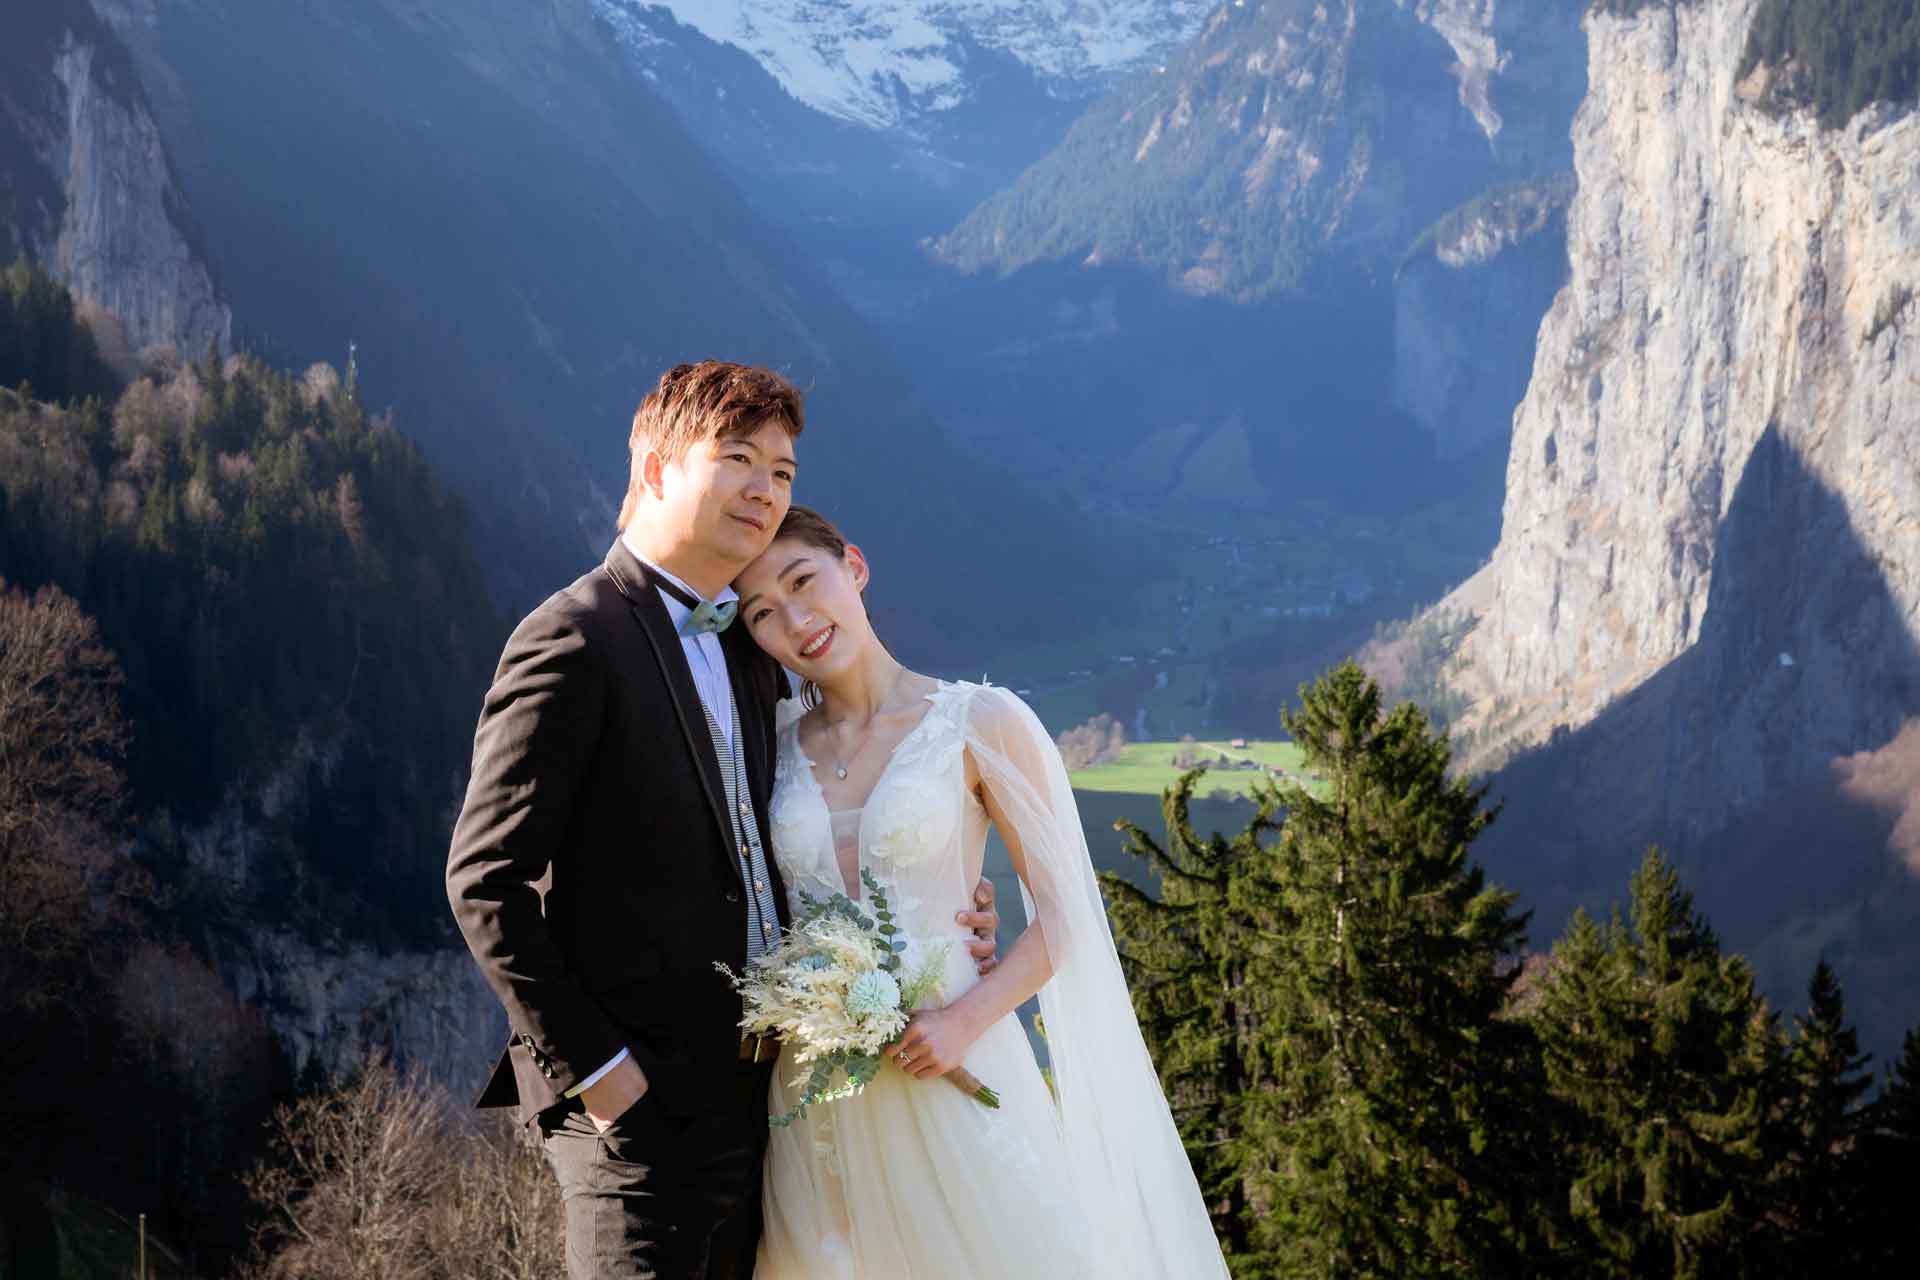 Post Wedding Photo Shoot in Lauterbrunnen